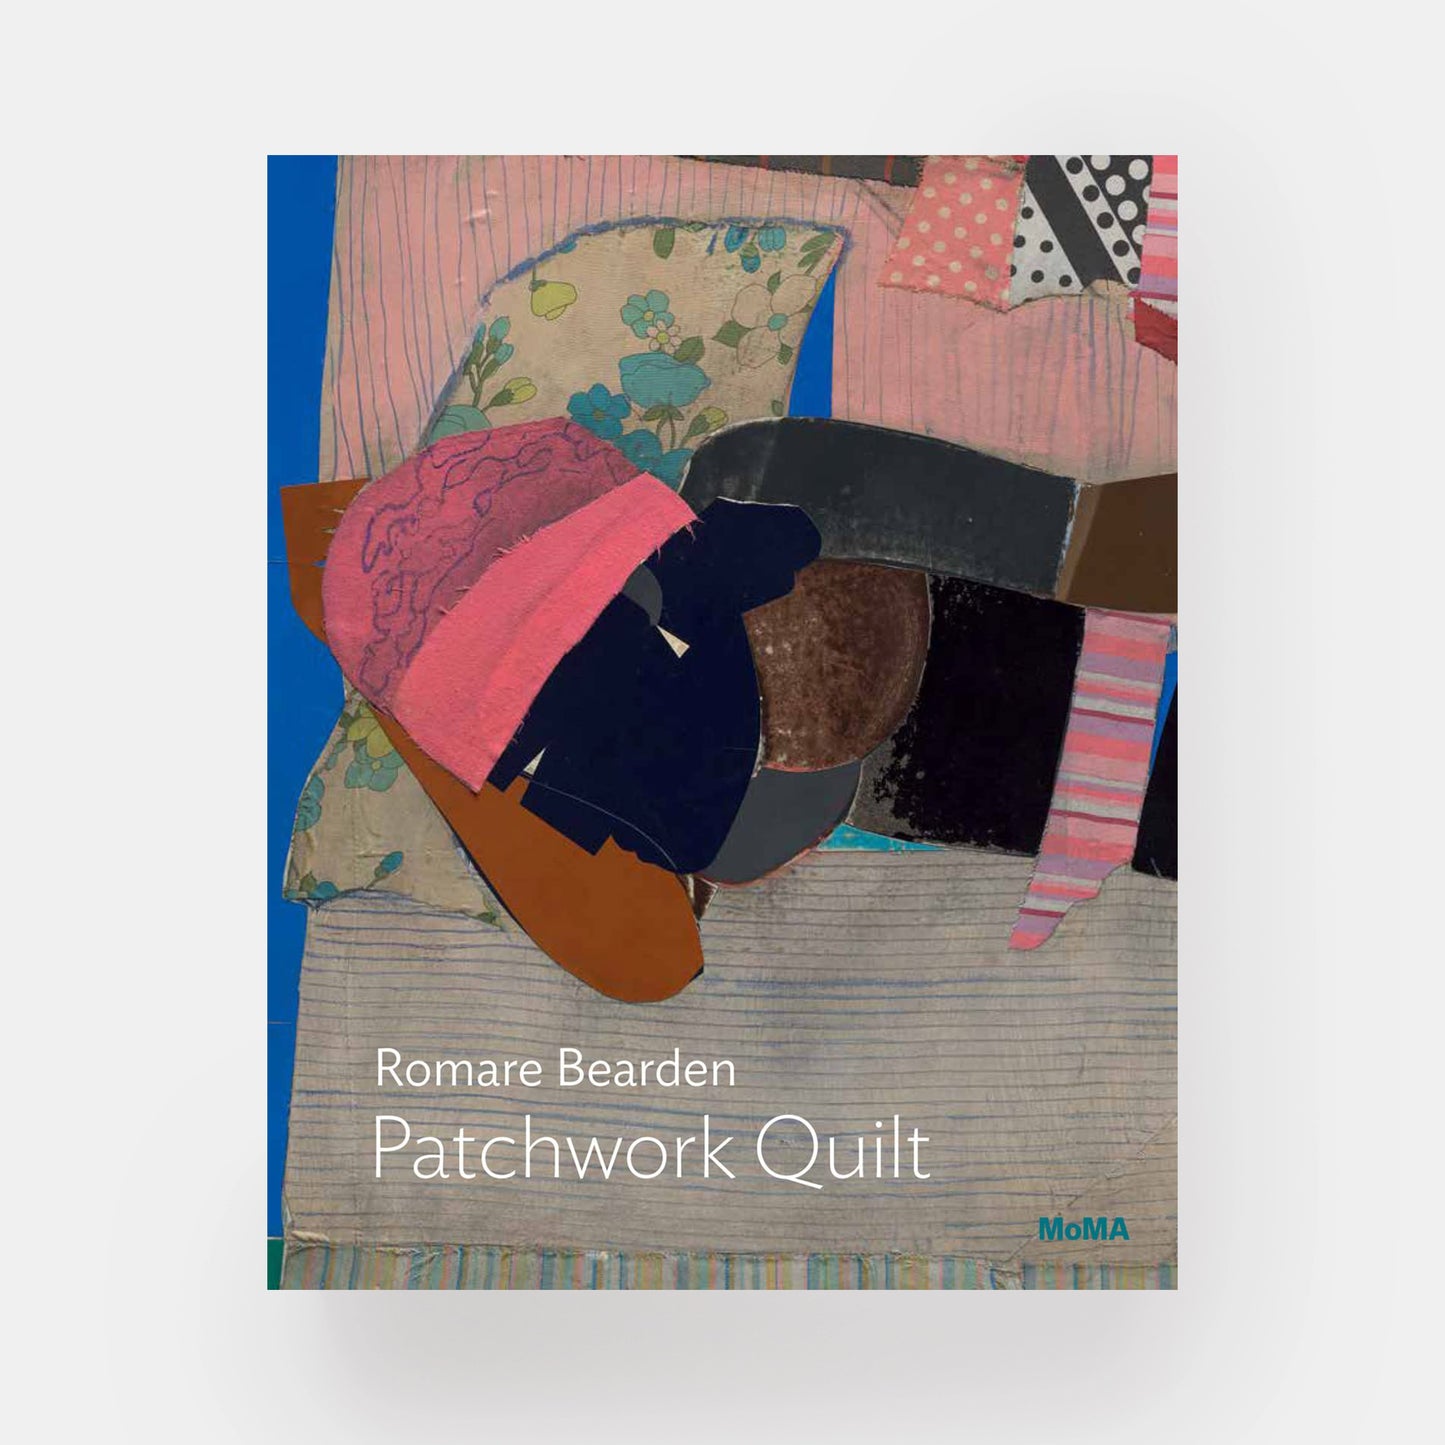 Romare Bearden: Patchwork Quilt